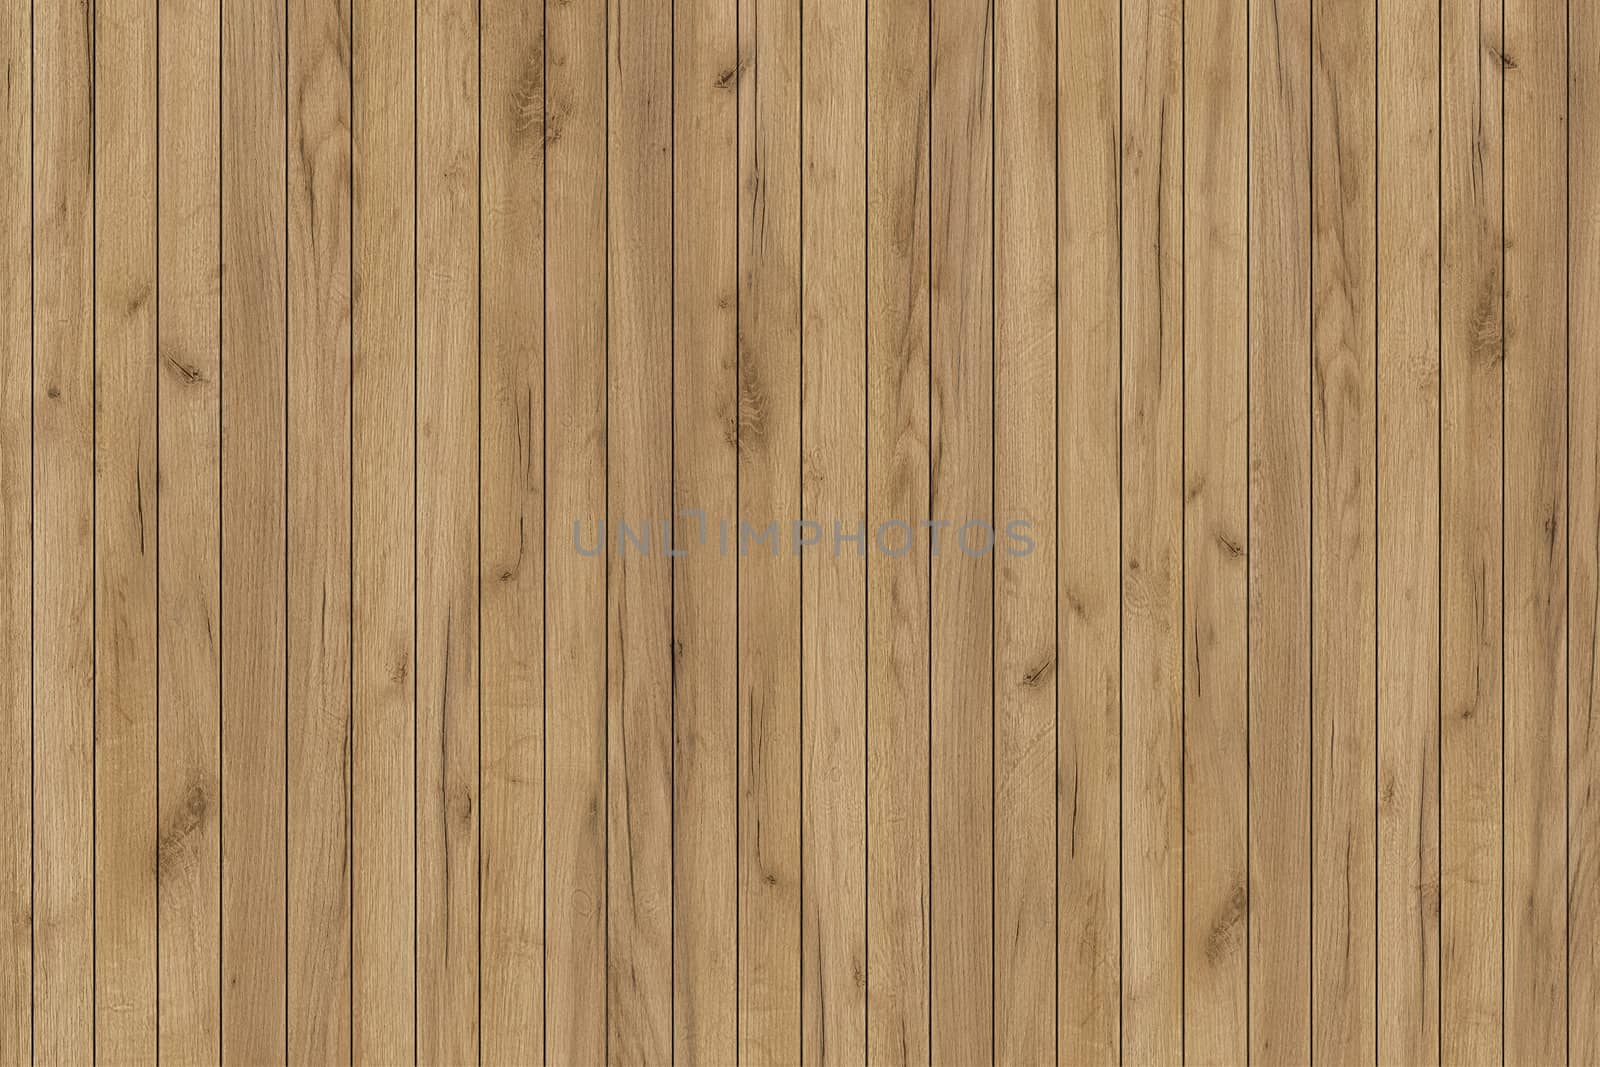 Grunge wood panels. Planks Background. old wall wooden floor vintage